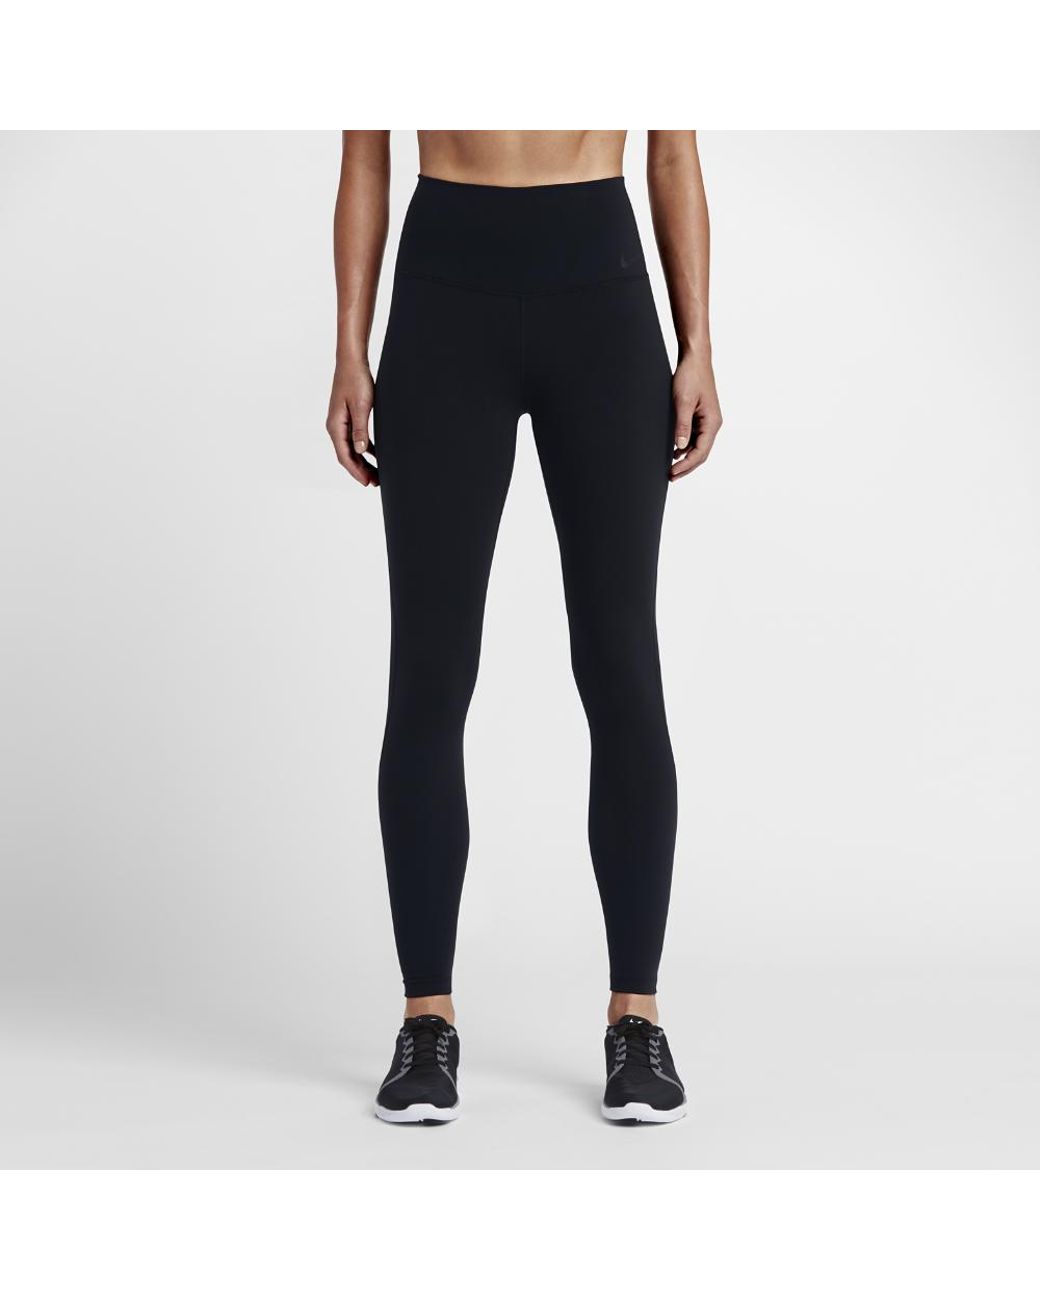 Nike Power Legendary Women's High Rise Training Tights in Black